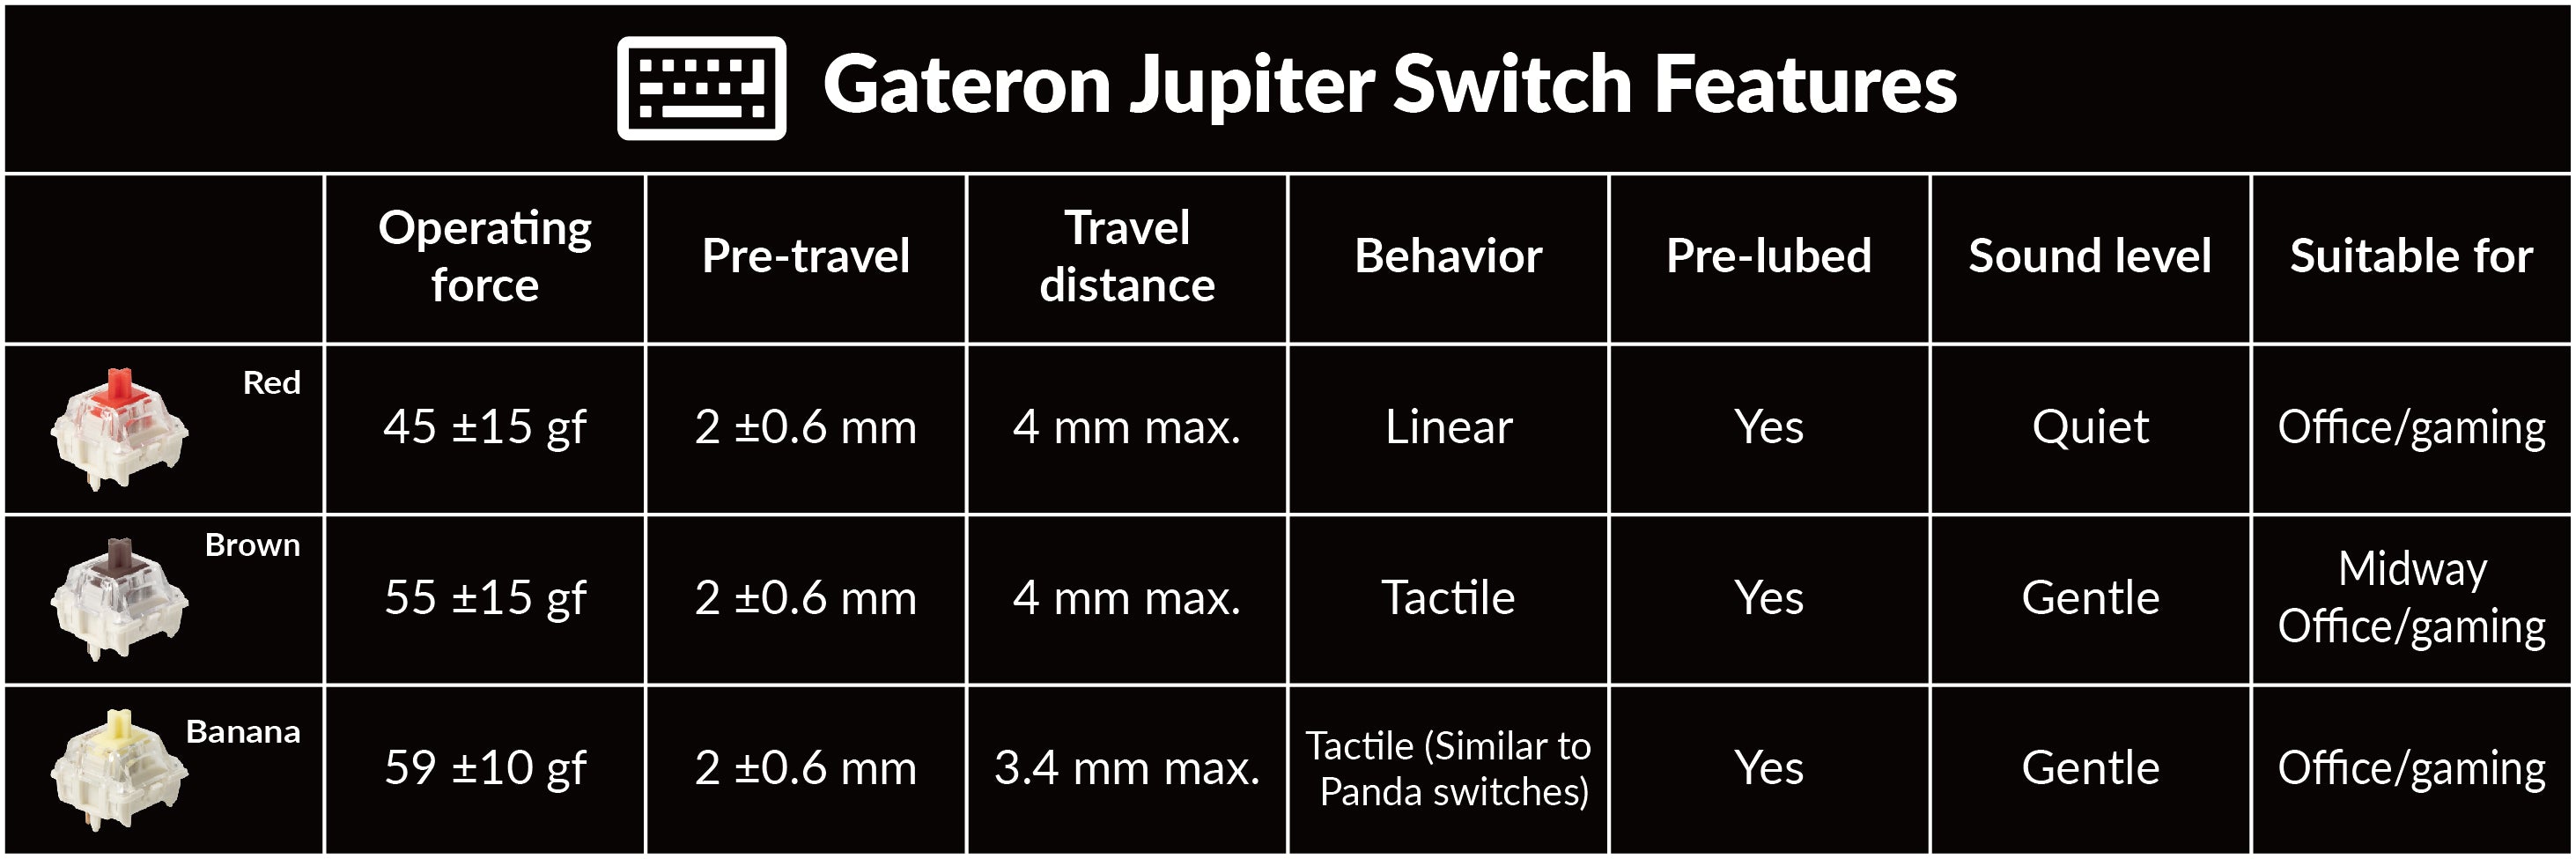 keychron-gateron-jupiter-mx-mechanical-switch-red-brown-banana__PID:49dcedb1-70c8-47e8-8266-2eefec72d927